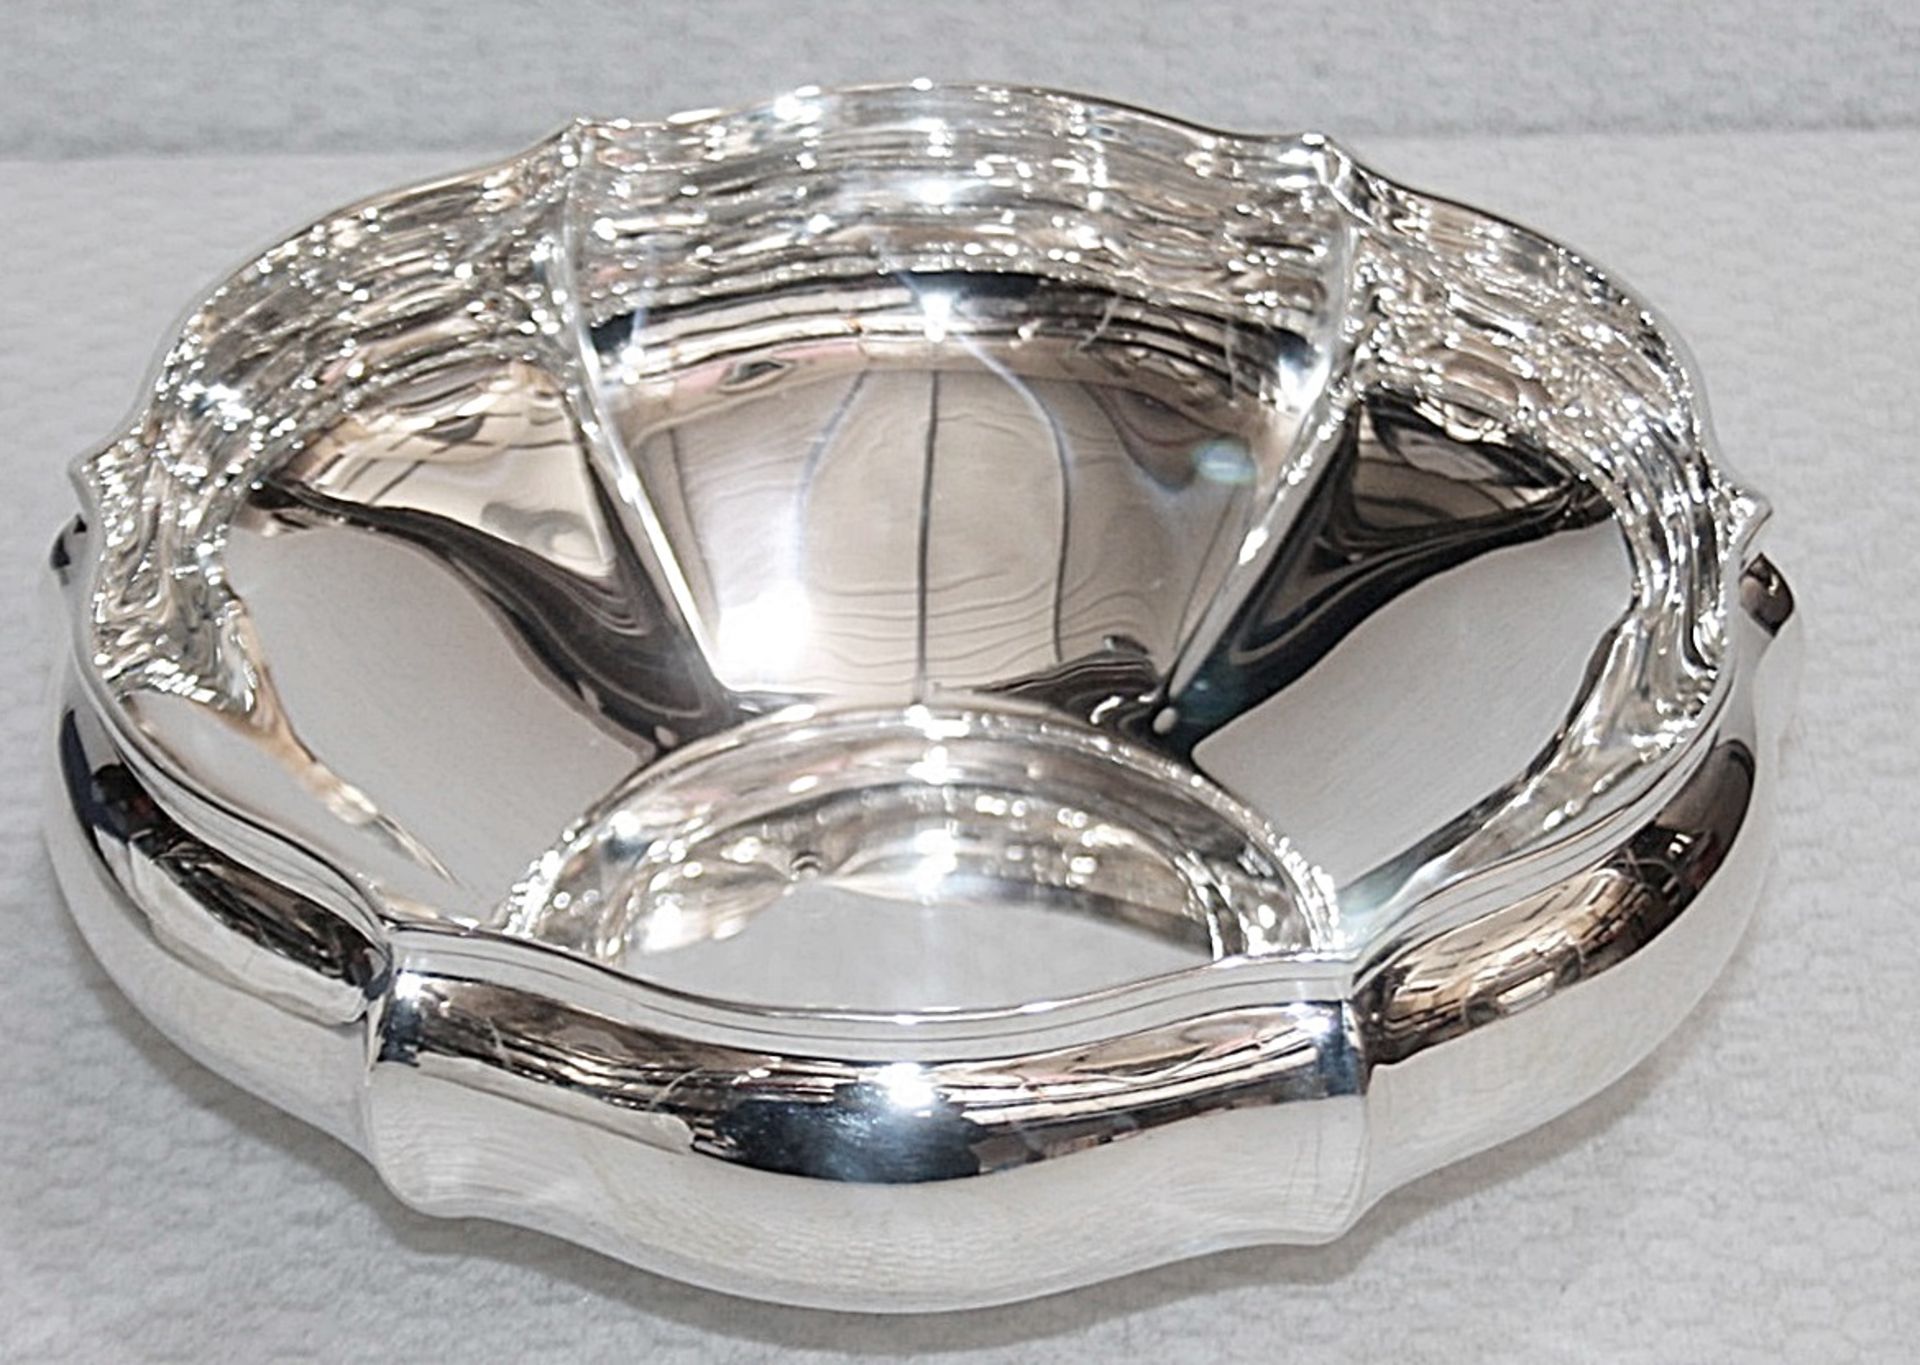 1 x GREGGIO Silver Plated Georgian Centrepiece Bowl (23cm) - Original Price £310.00 - Image 5 of 7